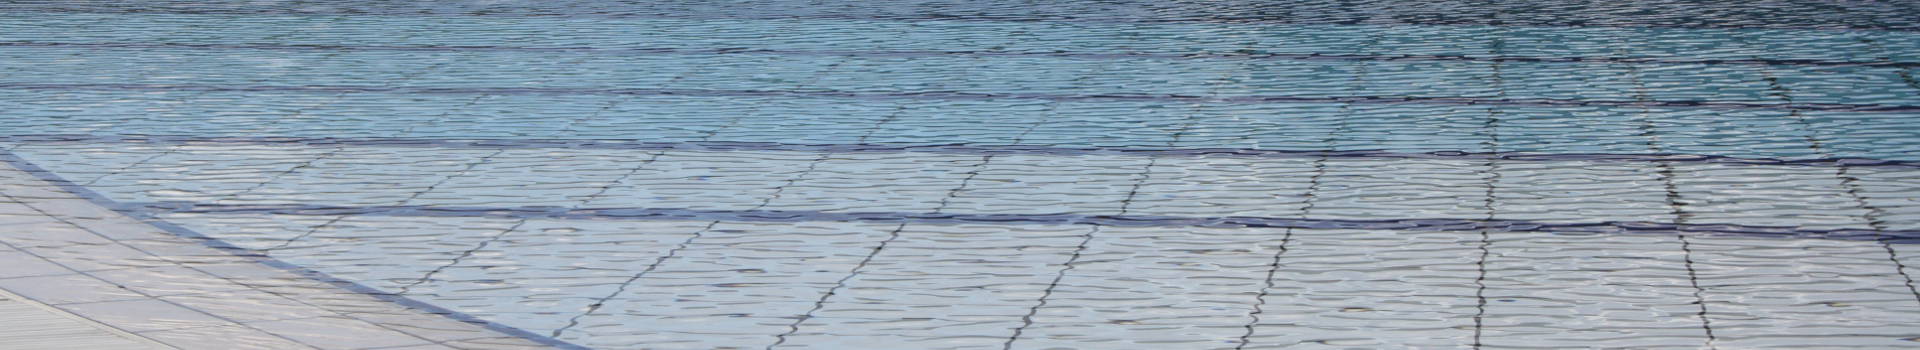 Isola d'Elba: Mauro Basile piscine